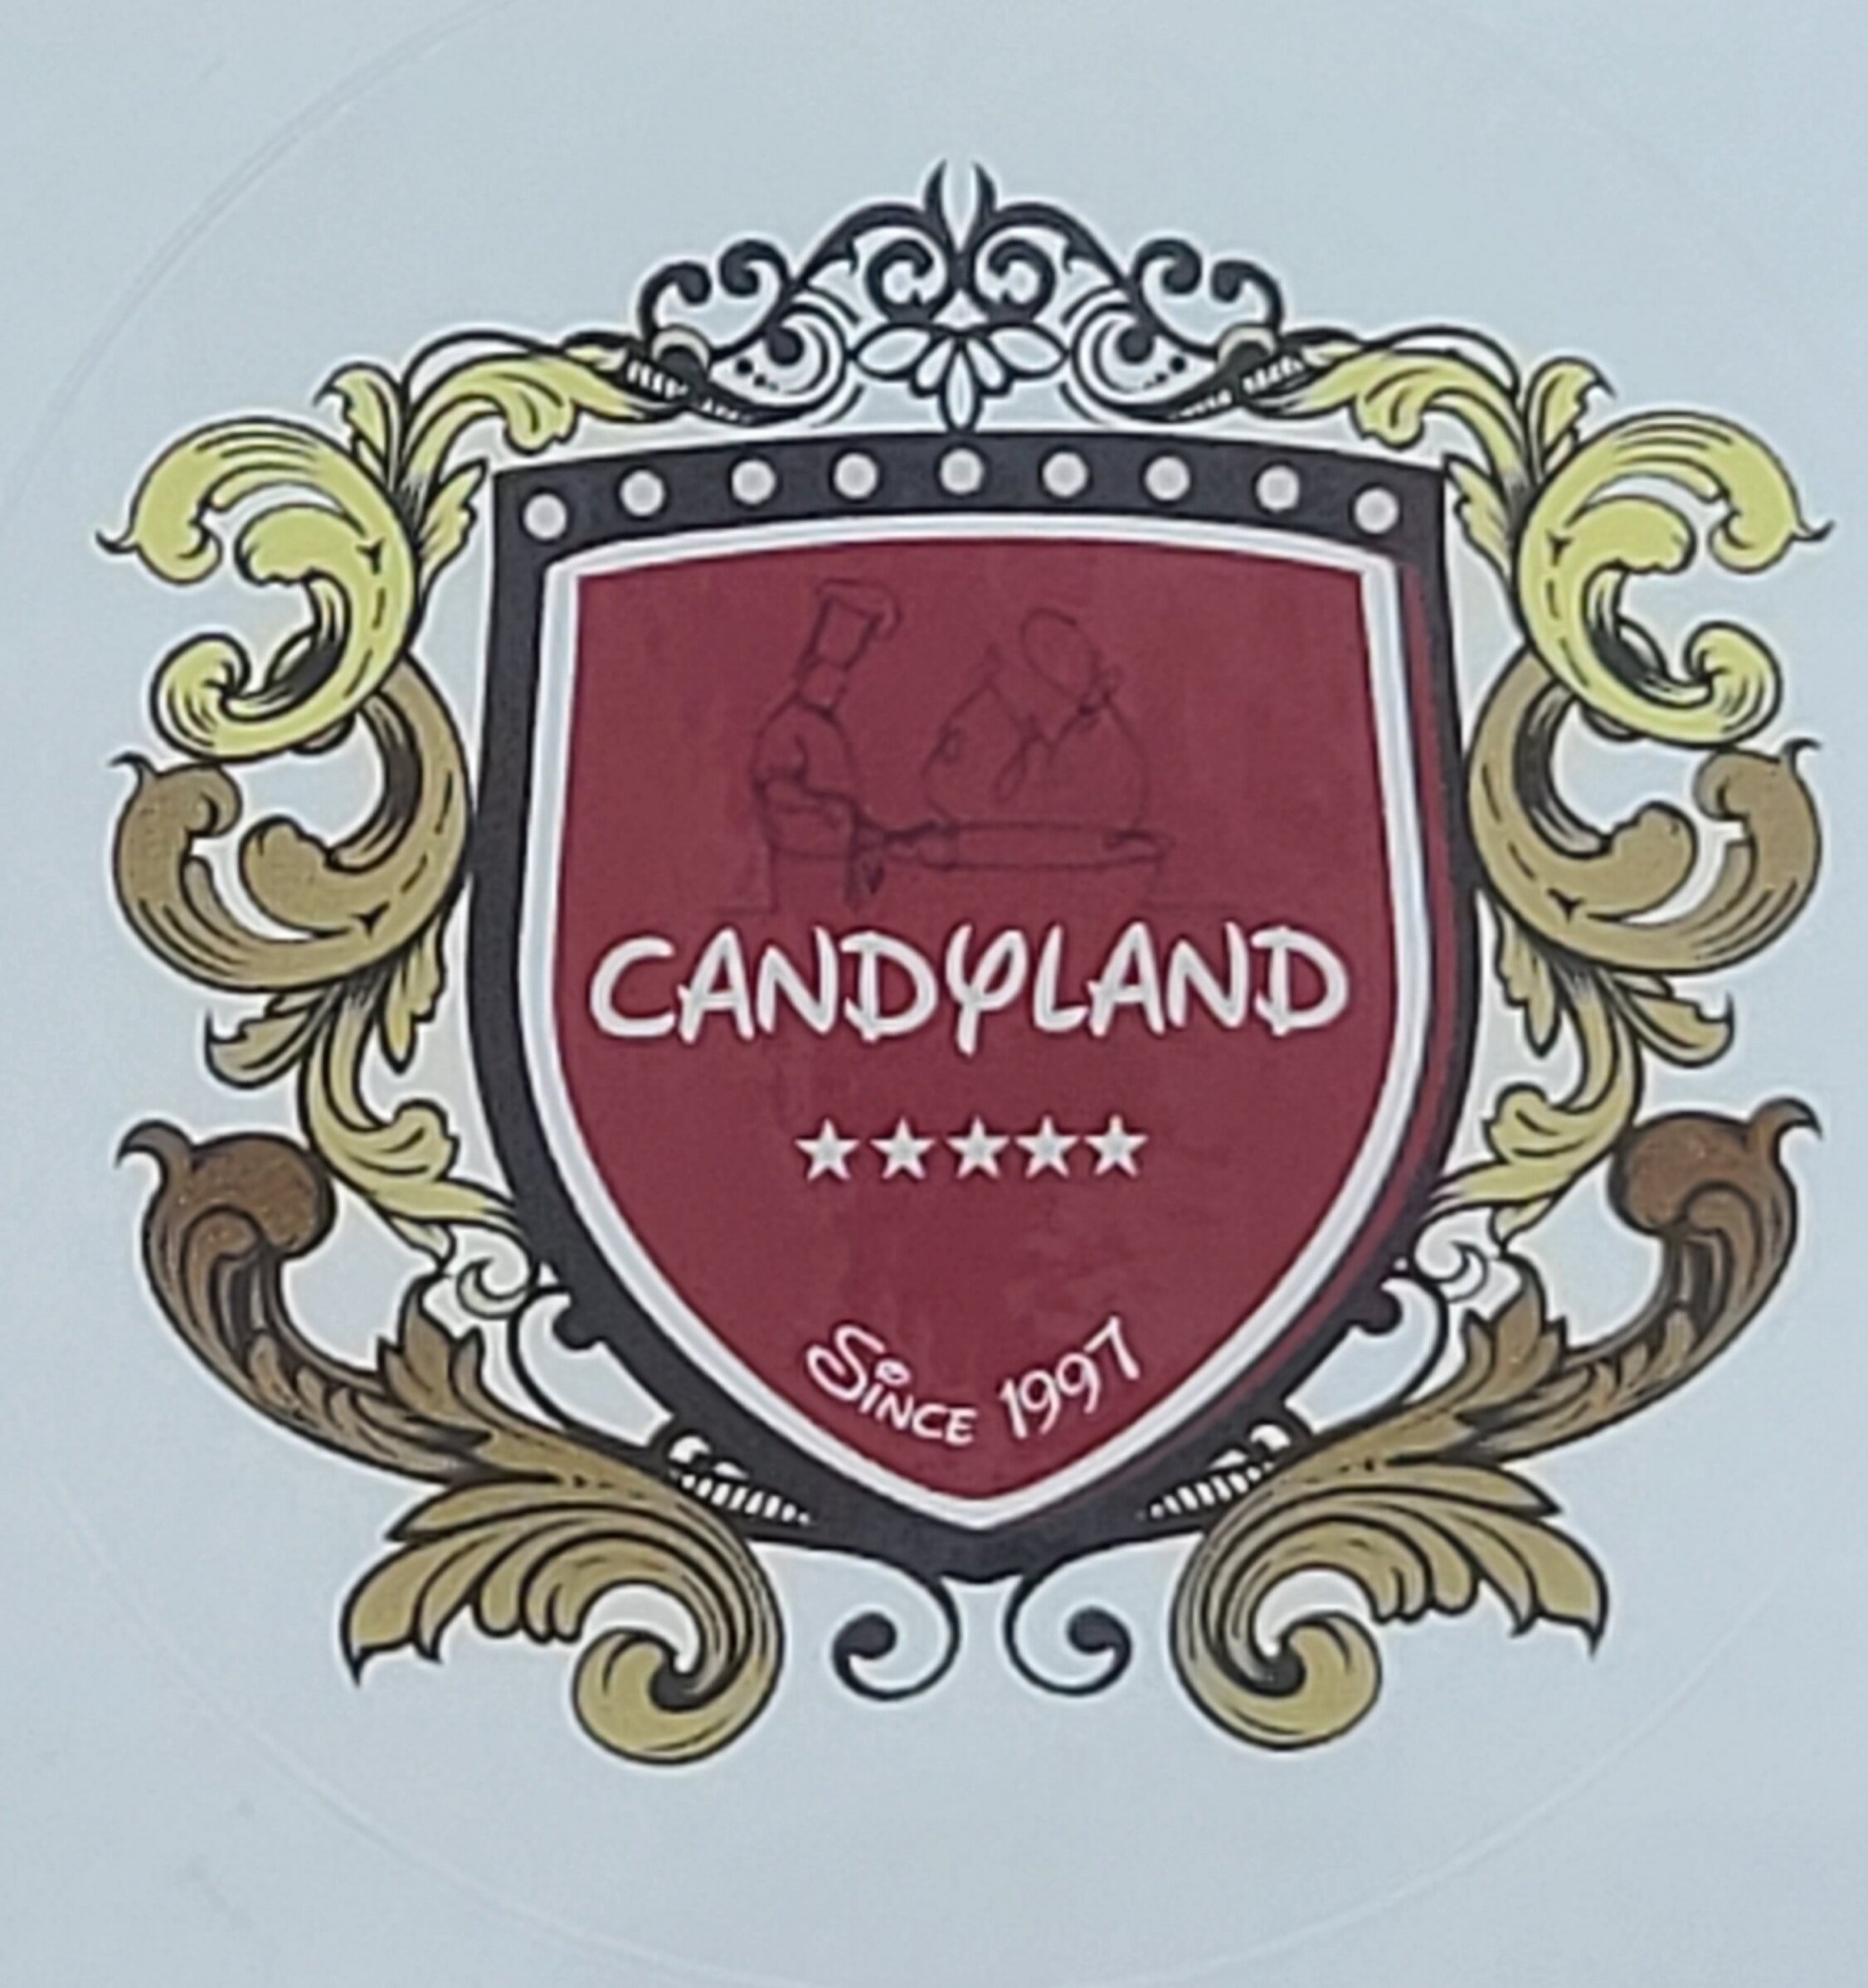 Candyland since 1997